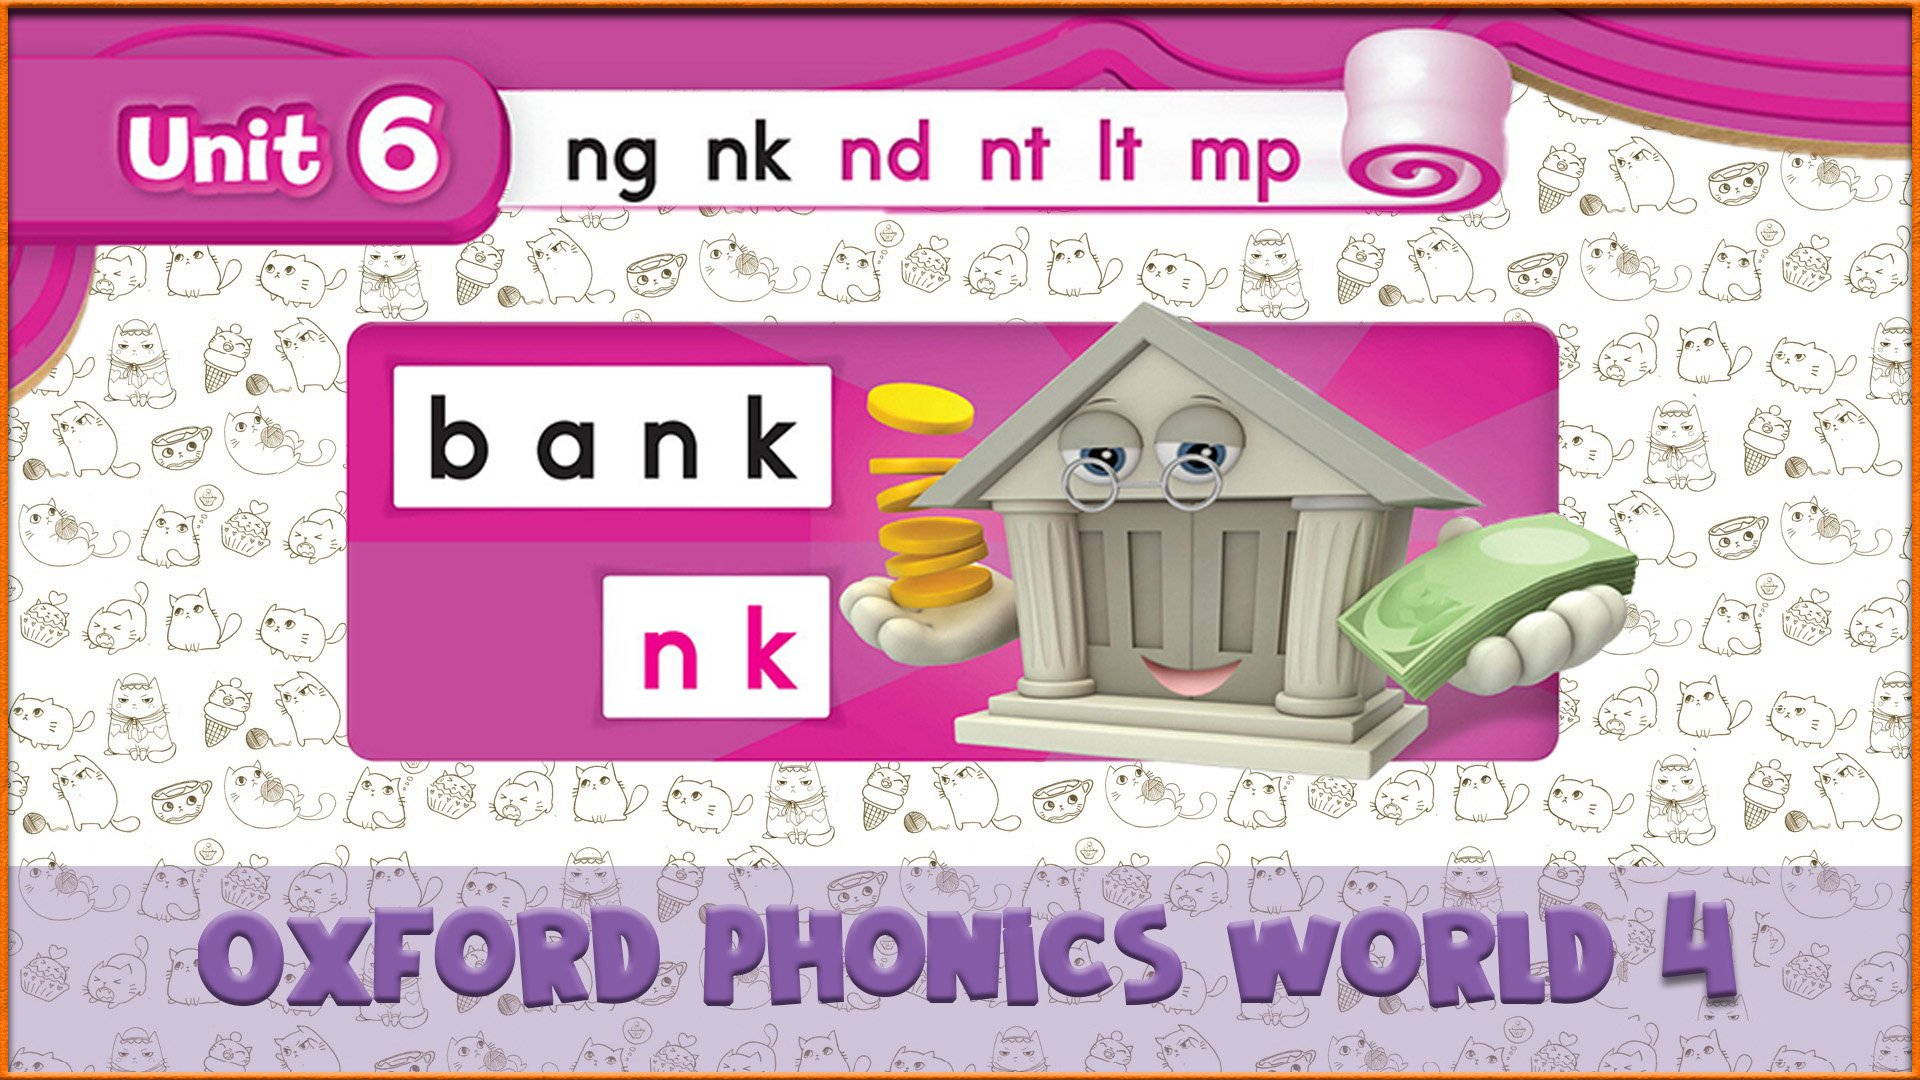 | nk | Oxford Phonics World 4 - Consonant Blends. #35